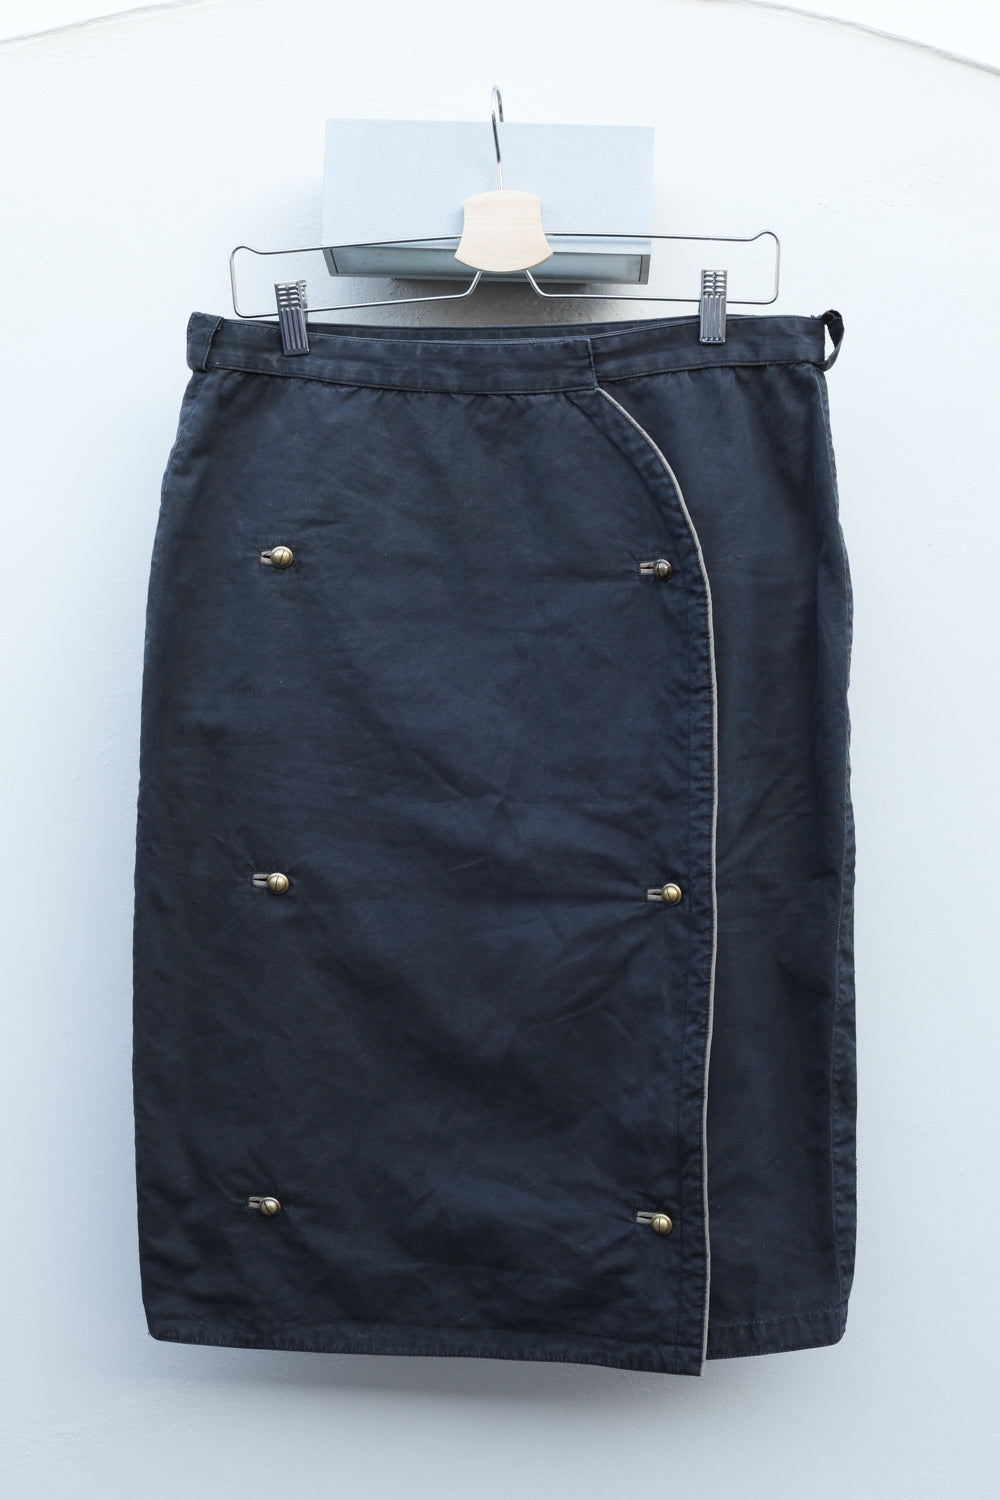 Gianni Versace Vintage 80s Pencil Skirt